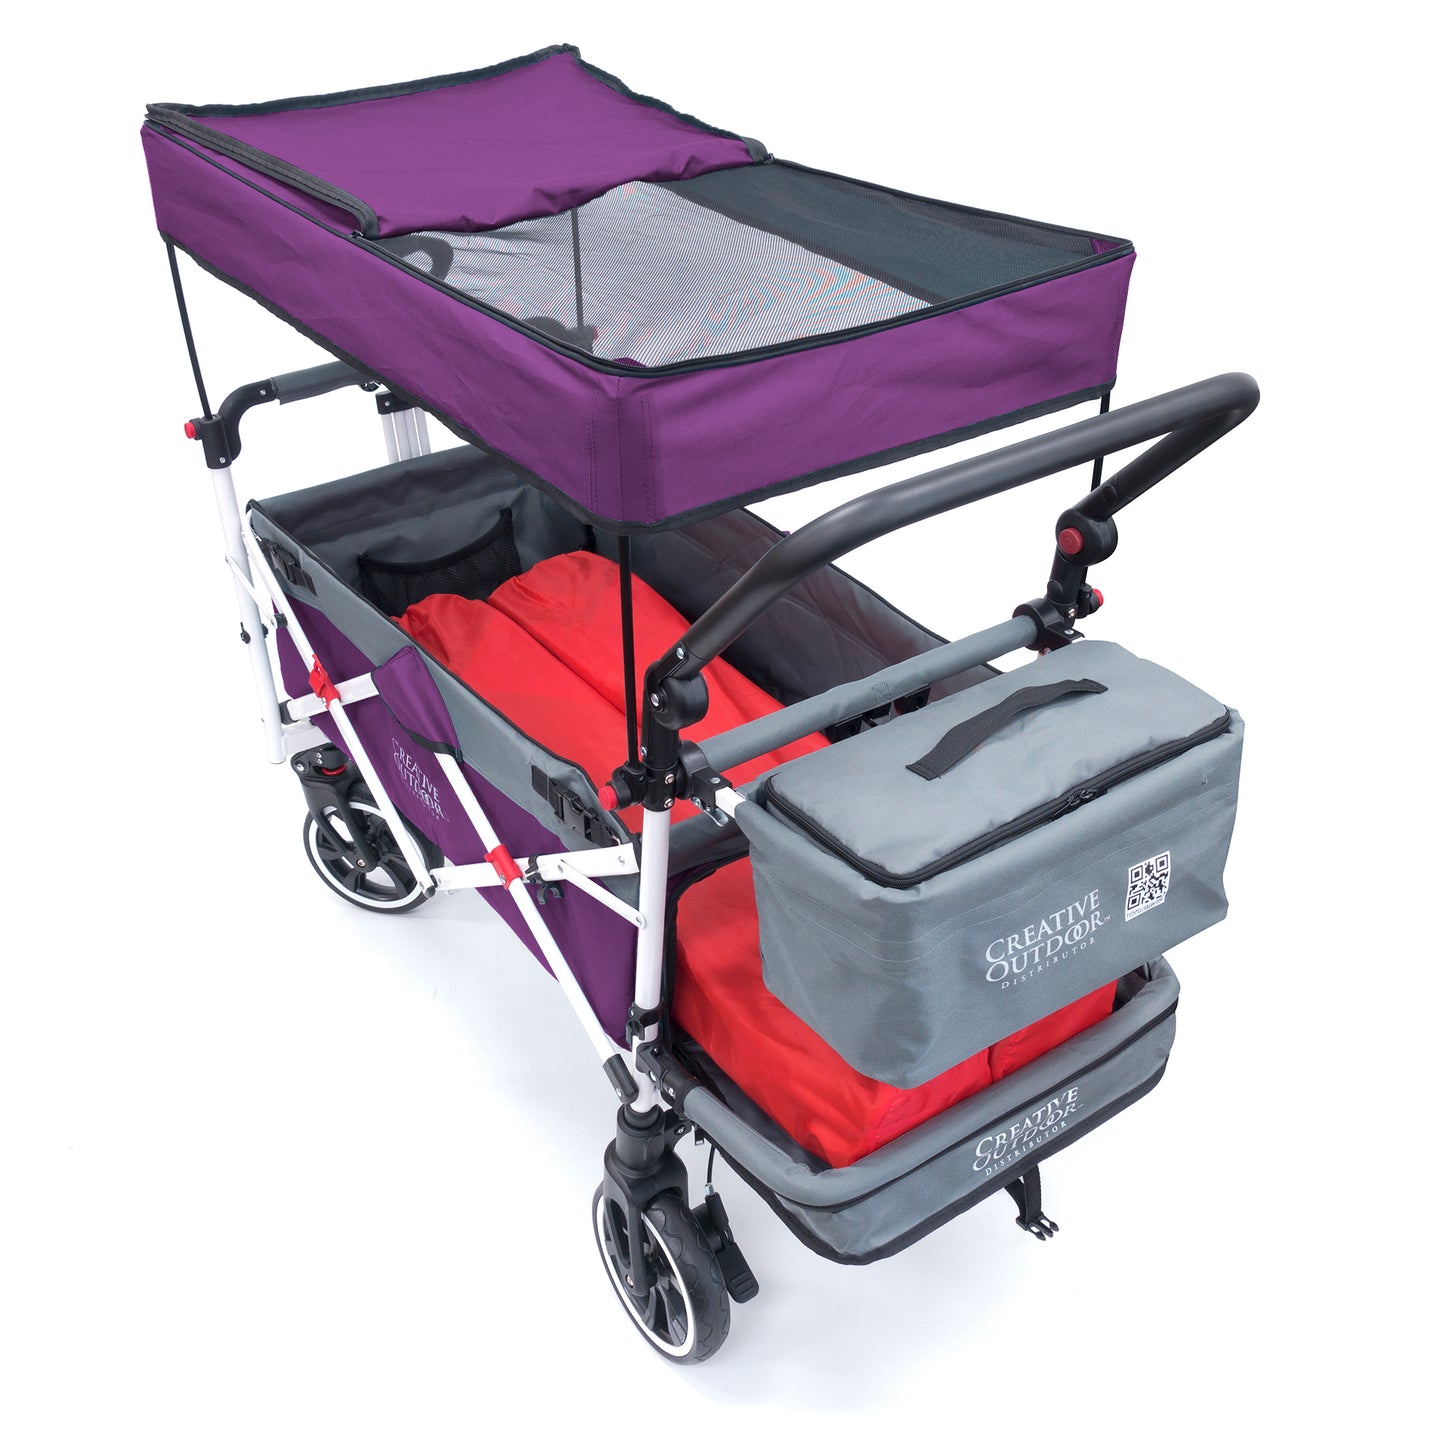 push-pull-titanium-series-plus-folding-wagon-stroller-with-canopy-purple